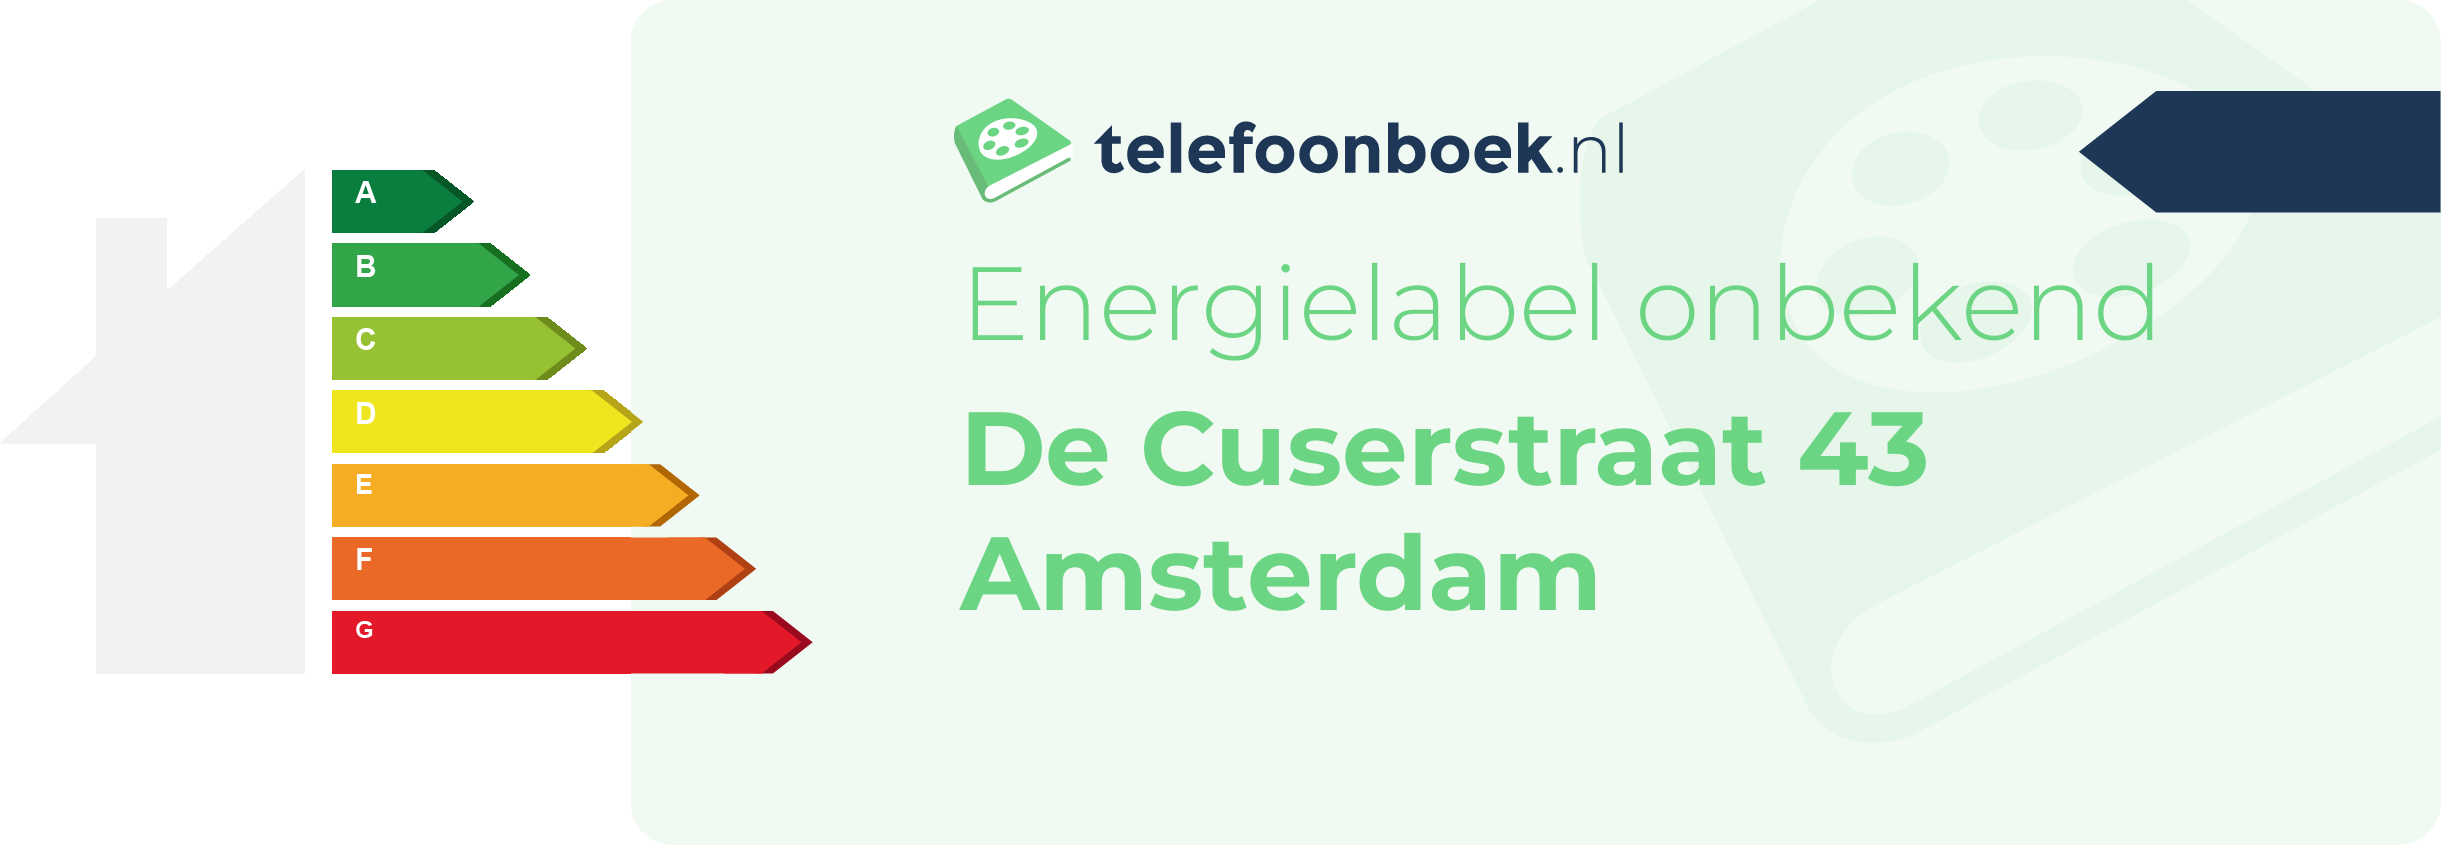 Energielabel De Cuserstraat 43 Amsterdam